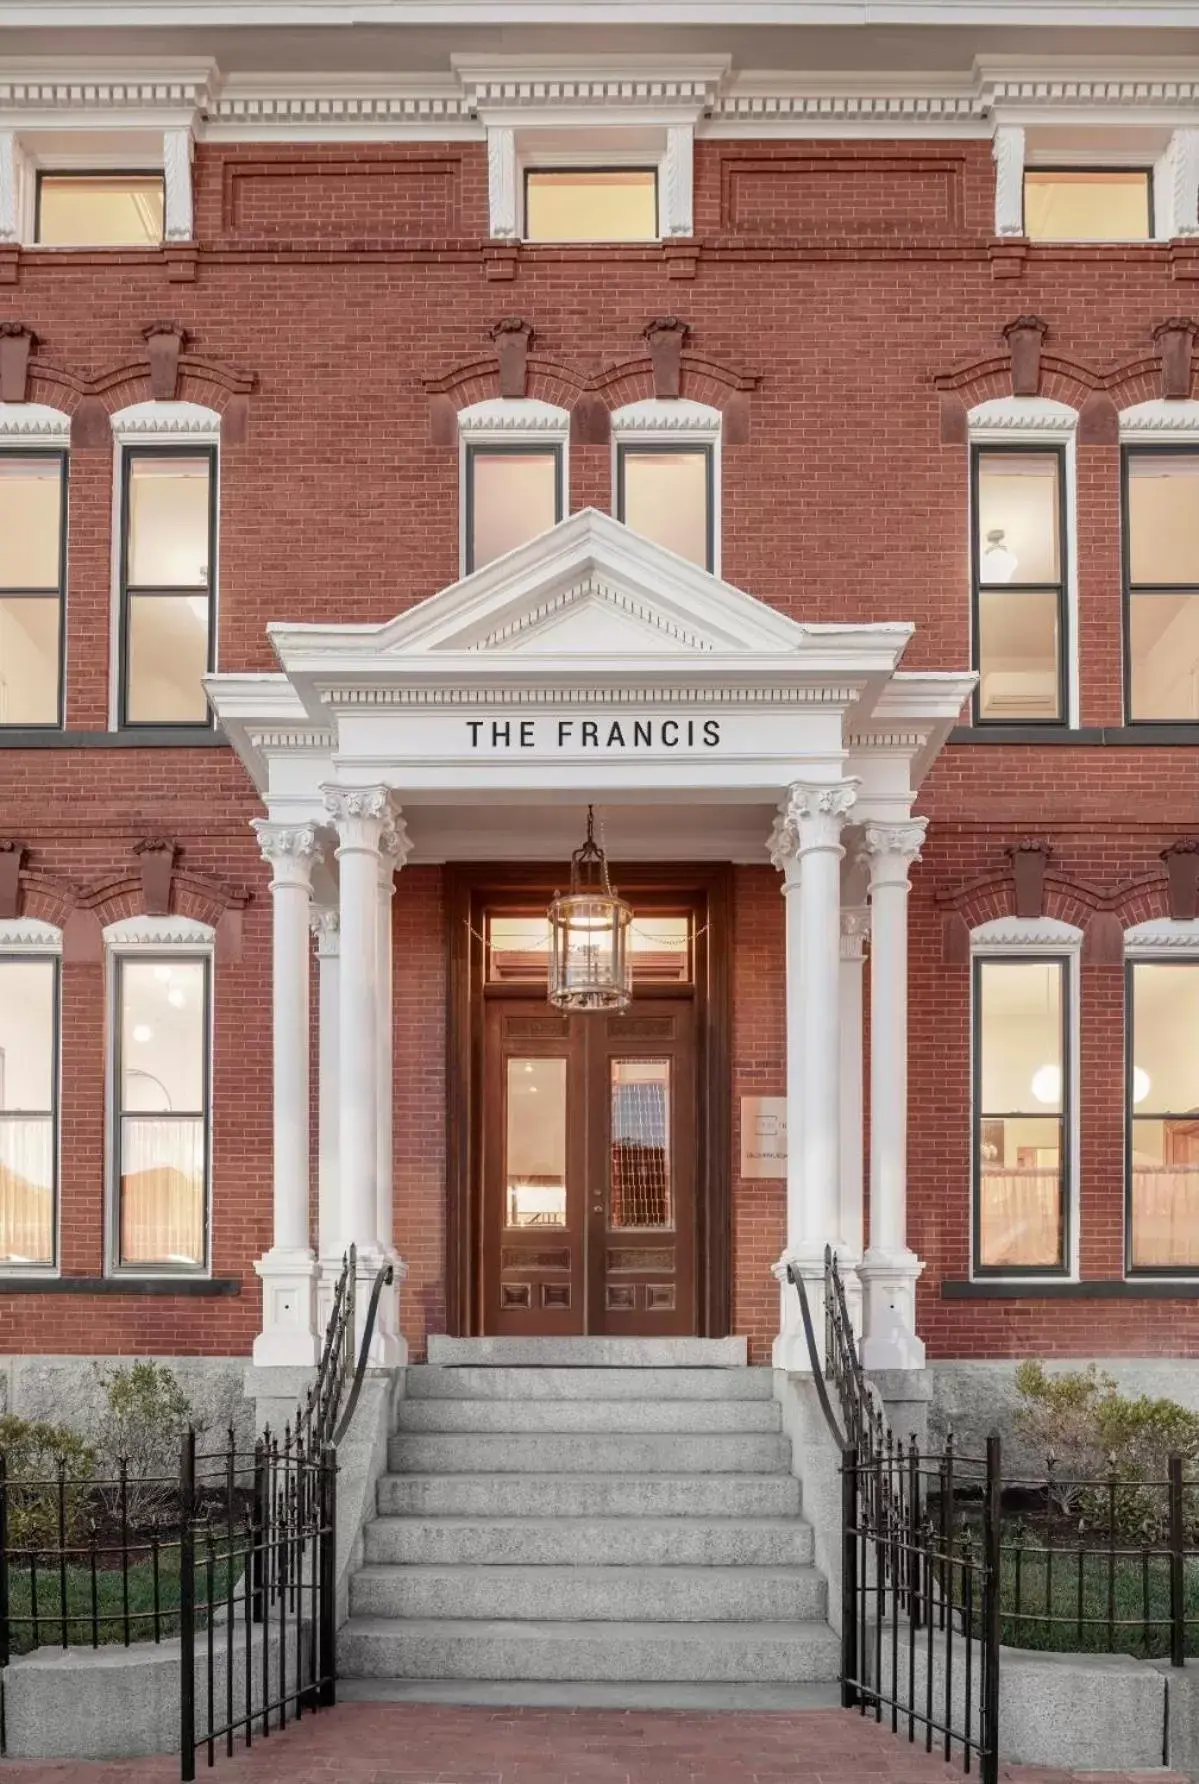 Facade/entrance in The Francis Hotel